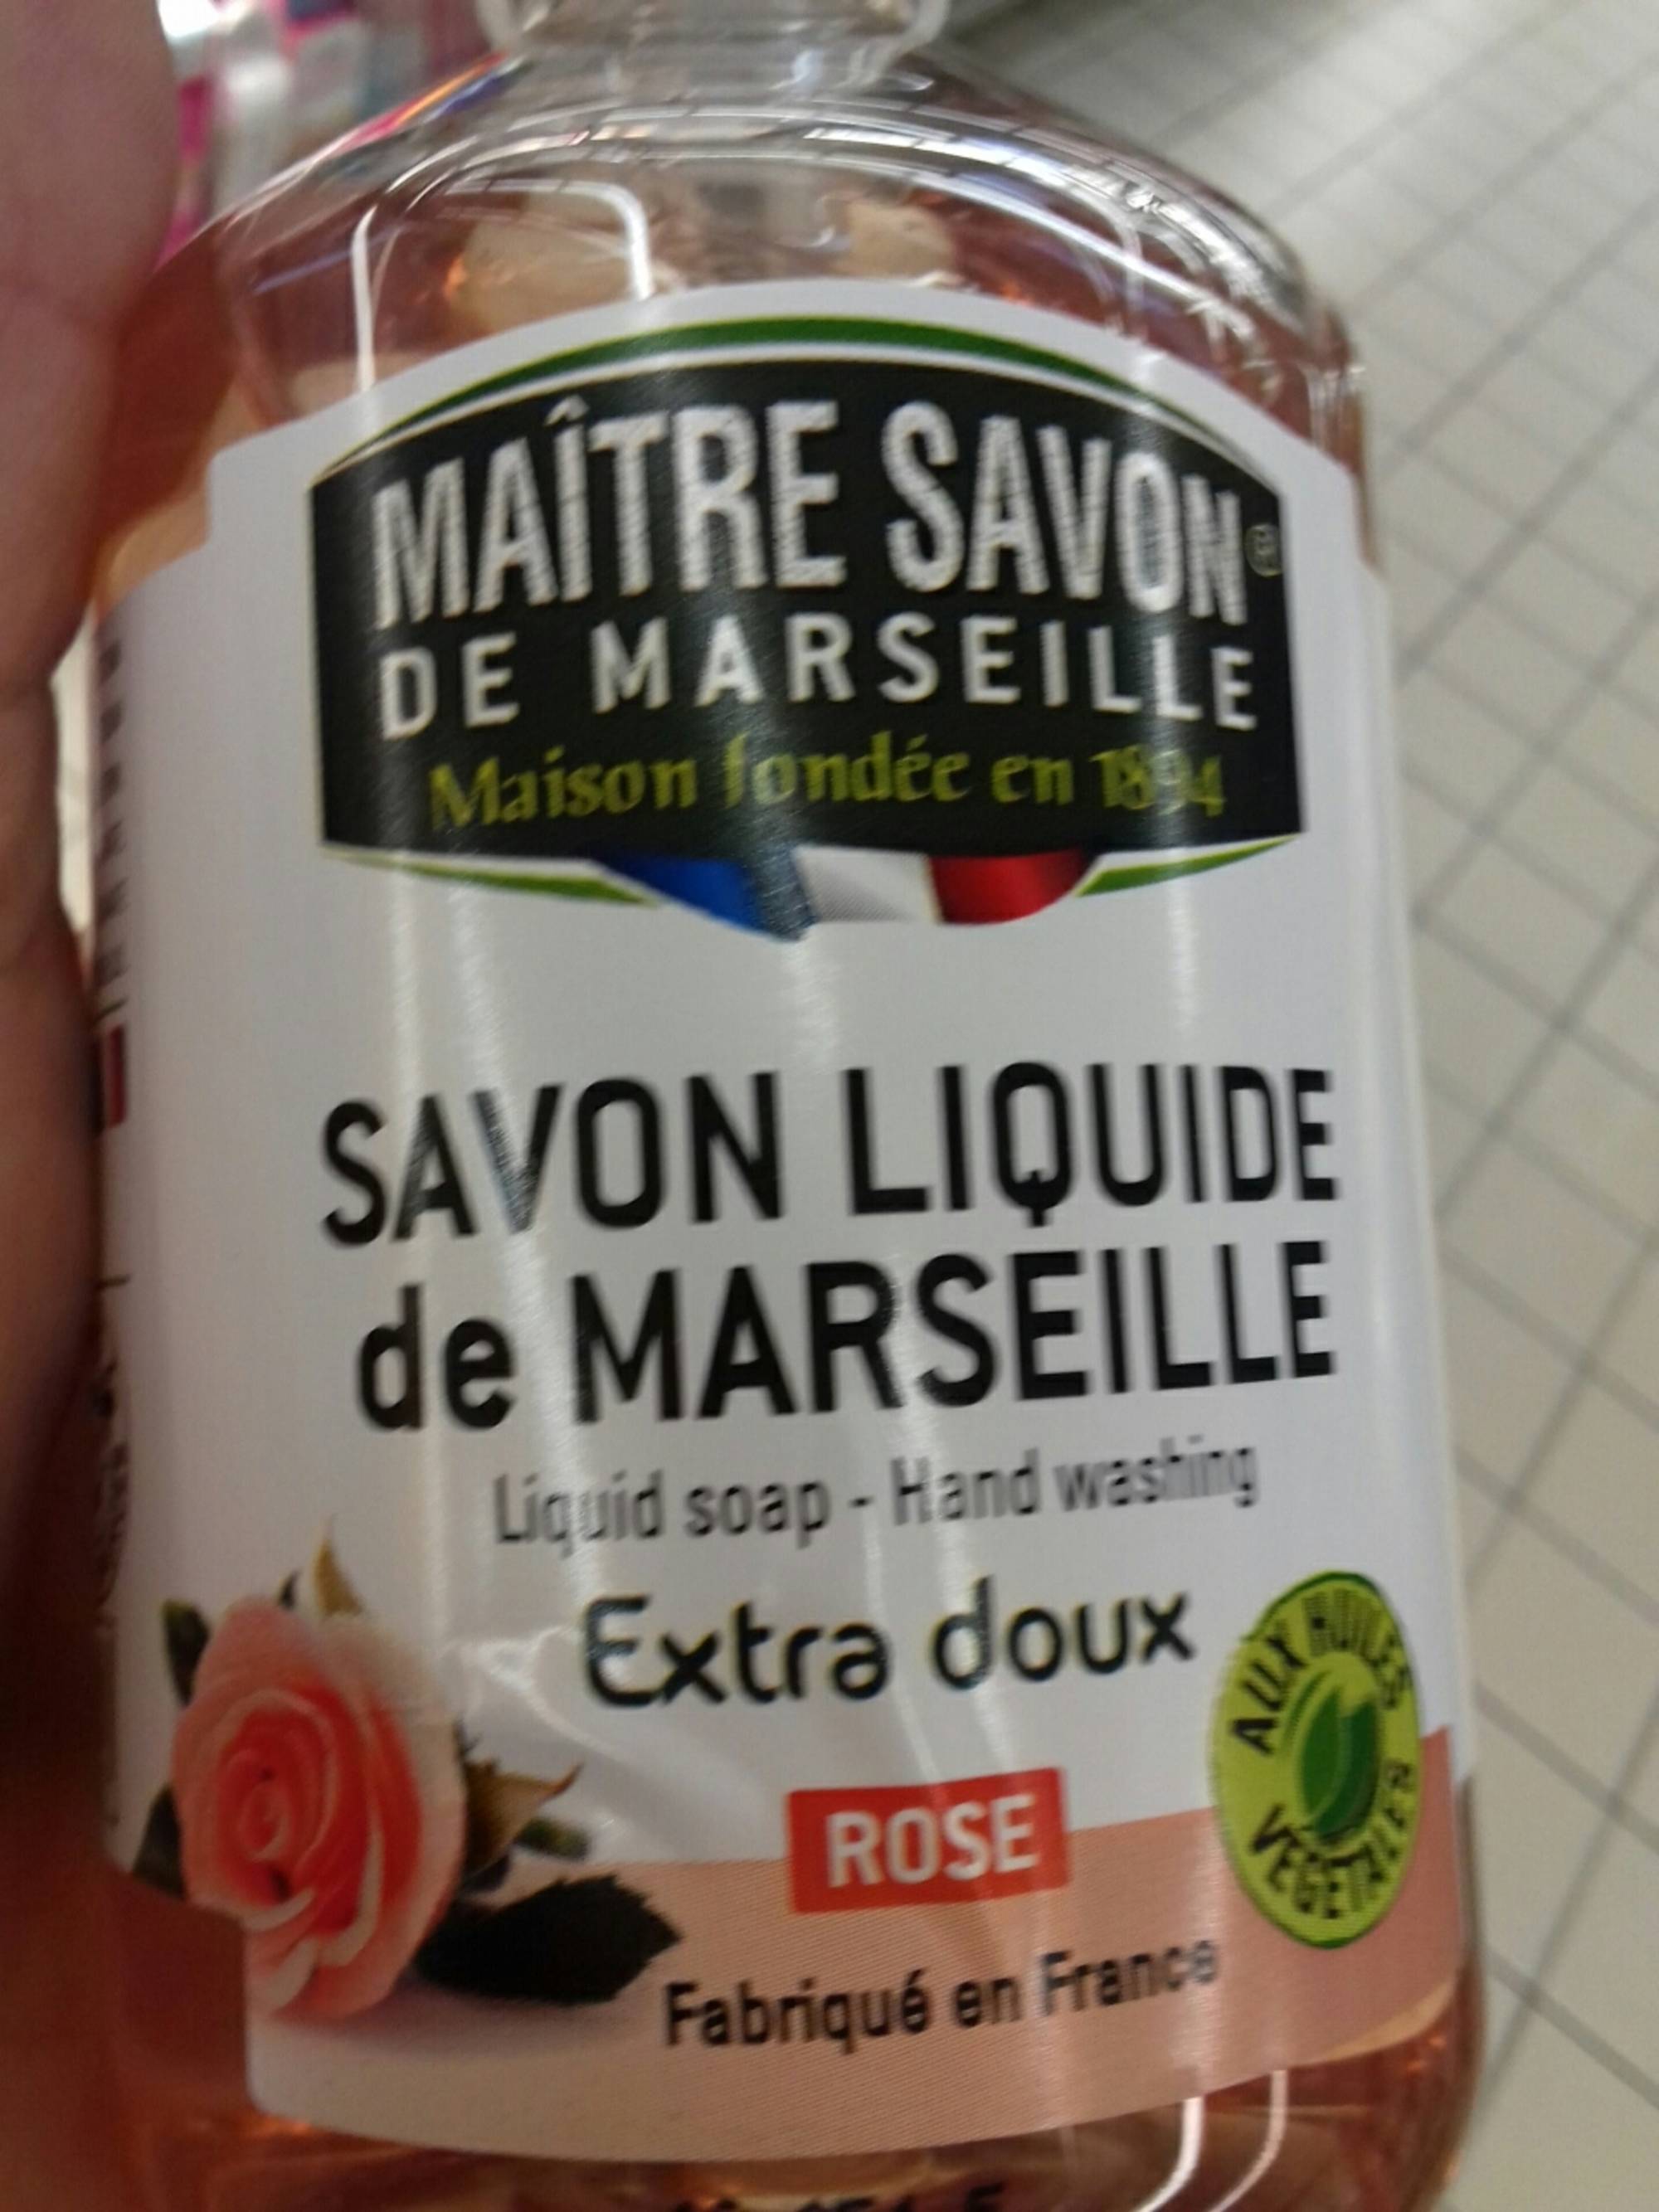 MAÎTRE SAVON DE MARSEILLE - Savon liquide de Marseille